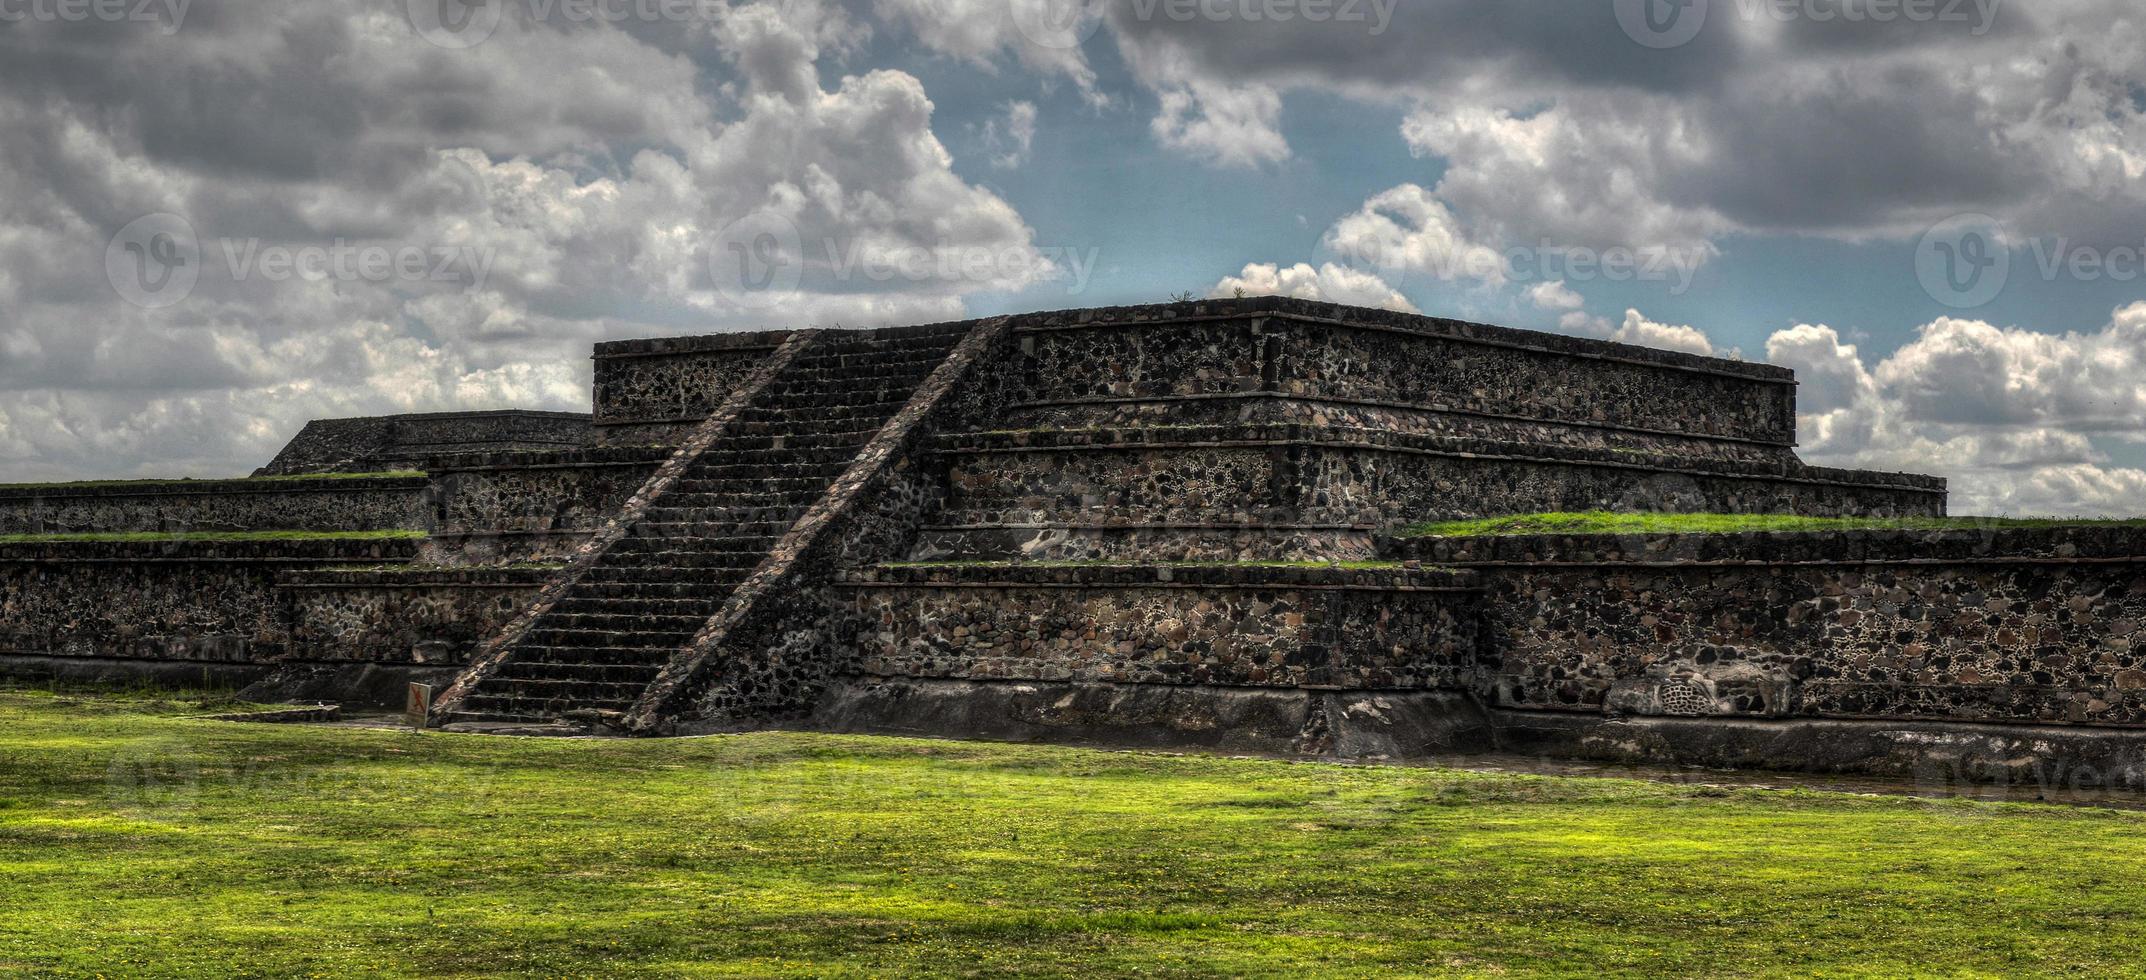 Pyramid of Teotihuacan photo